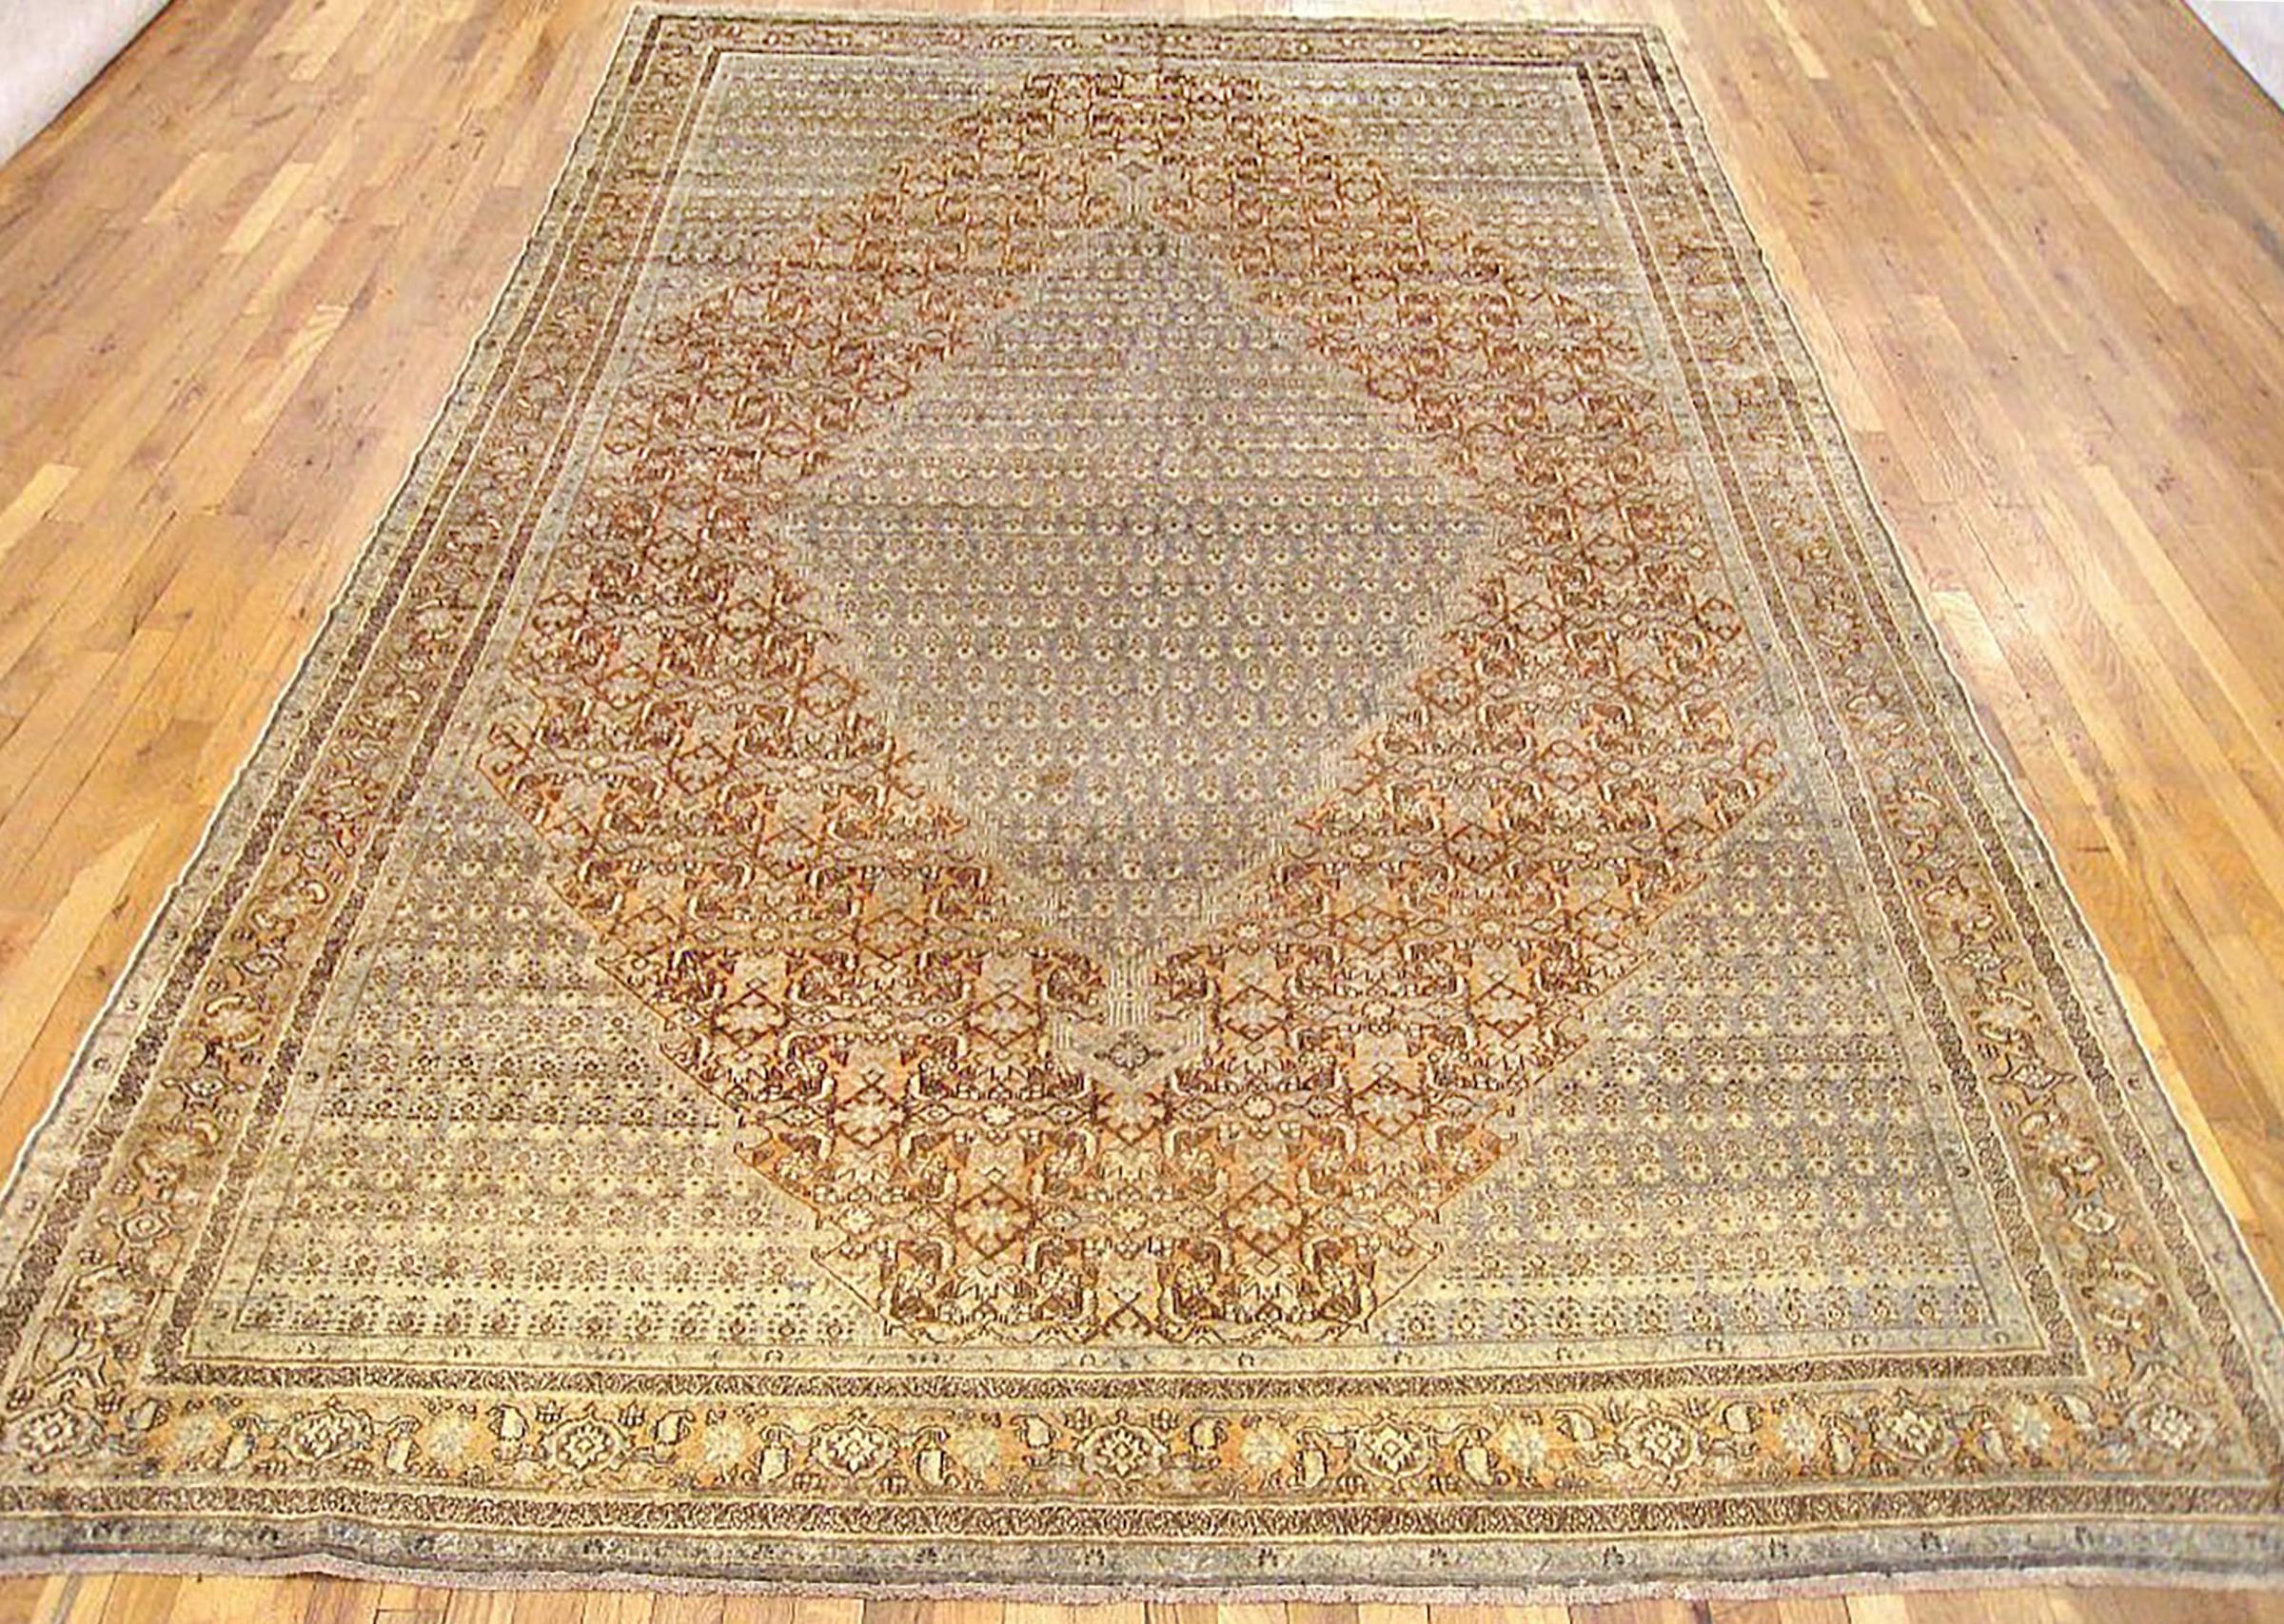 Antique Persian Bibikabad Oriental Rug, Gallery size

An antique Persian Bibikabad oriental rug, size 11'8